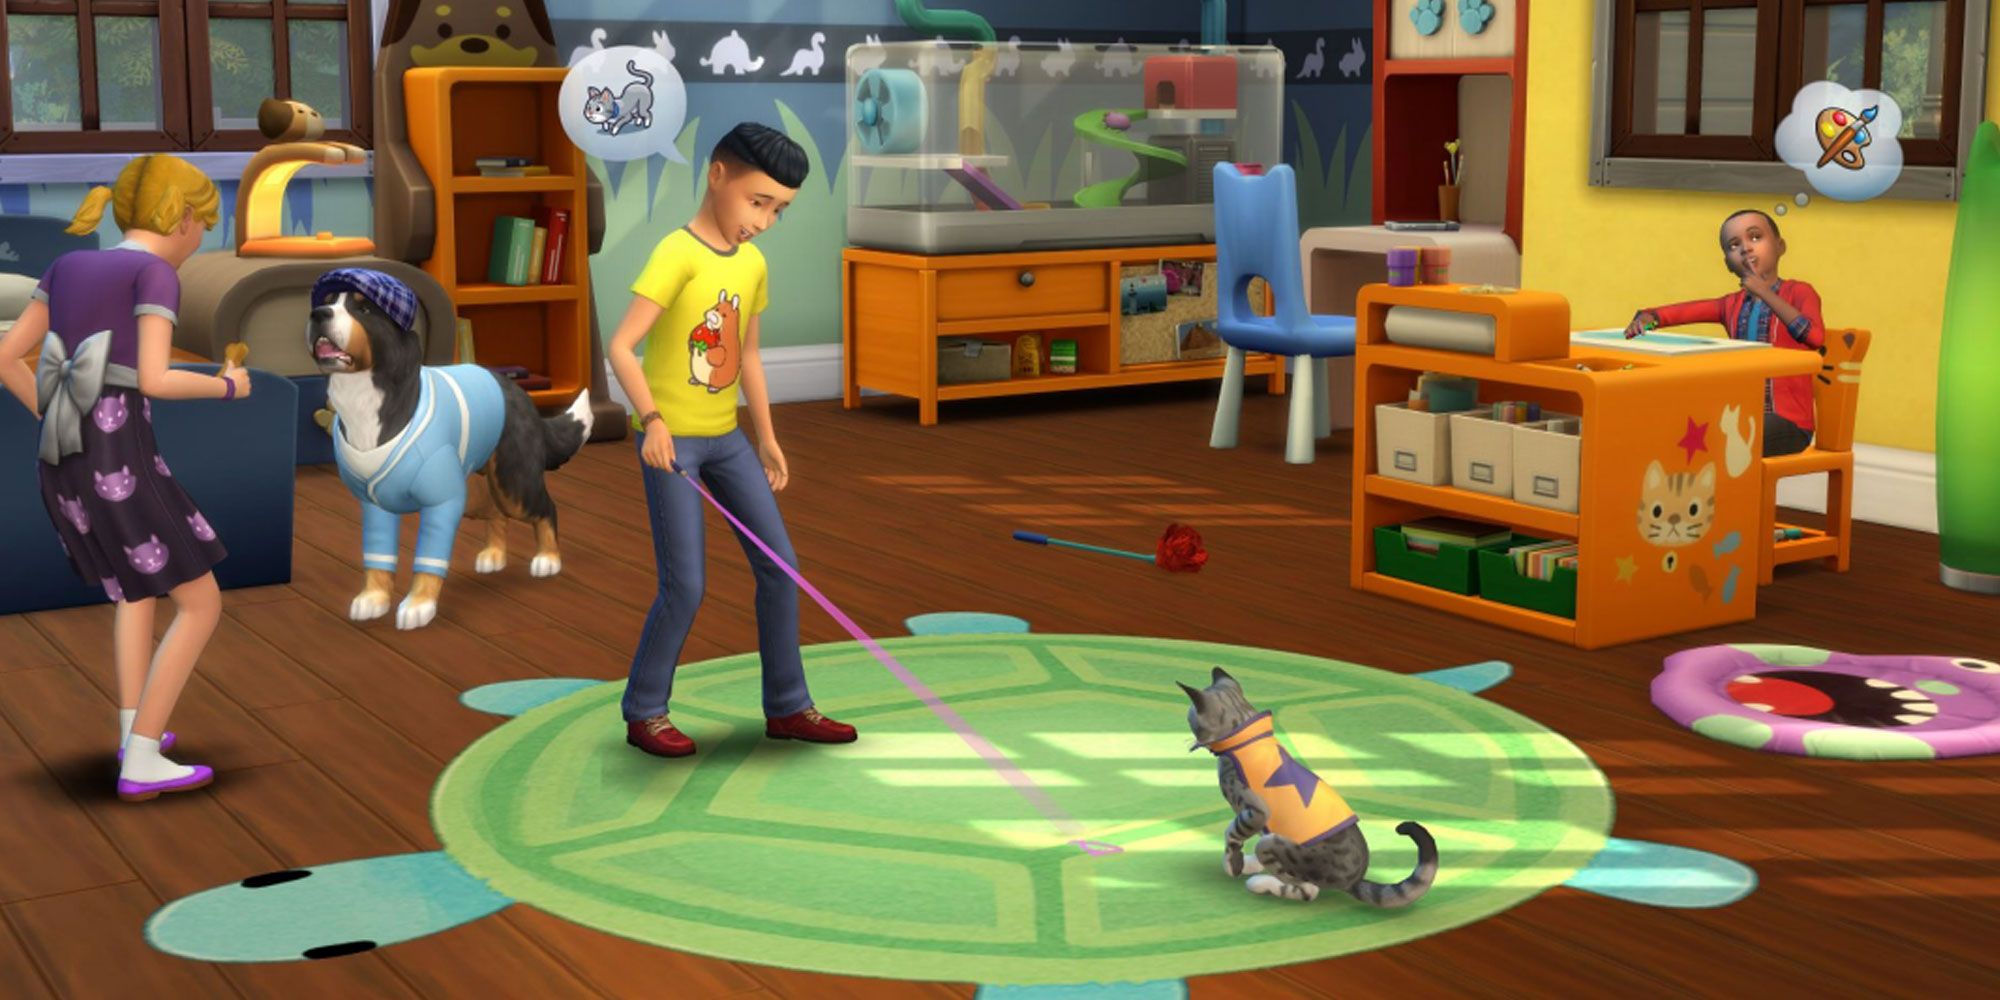 Sims Pets